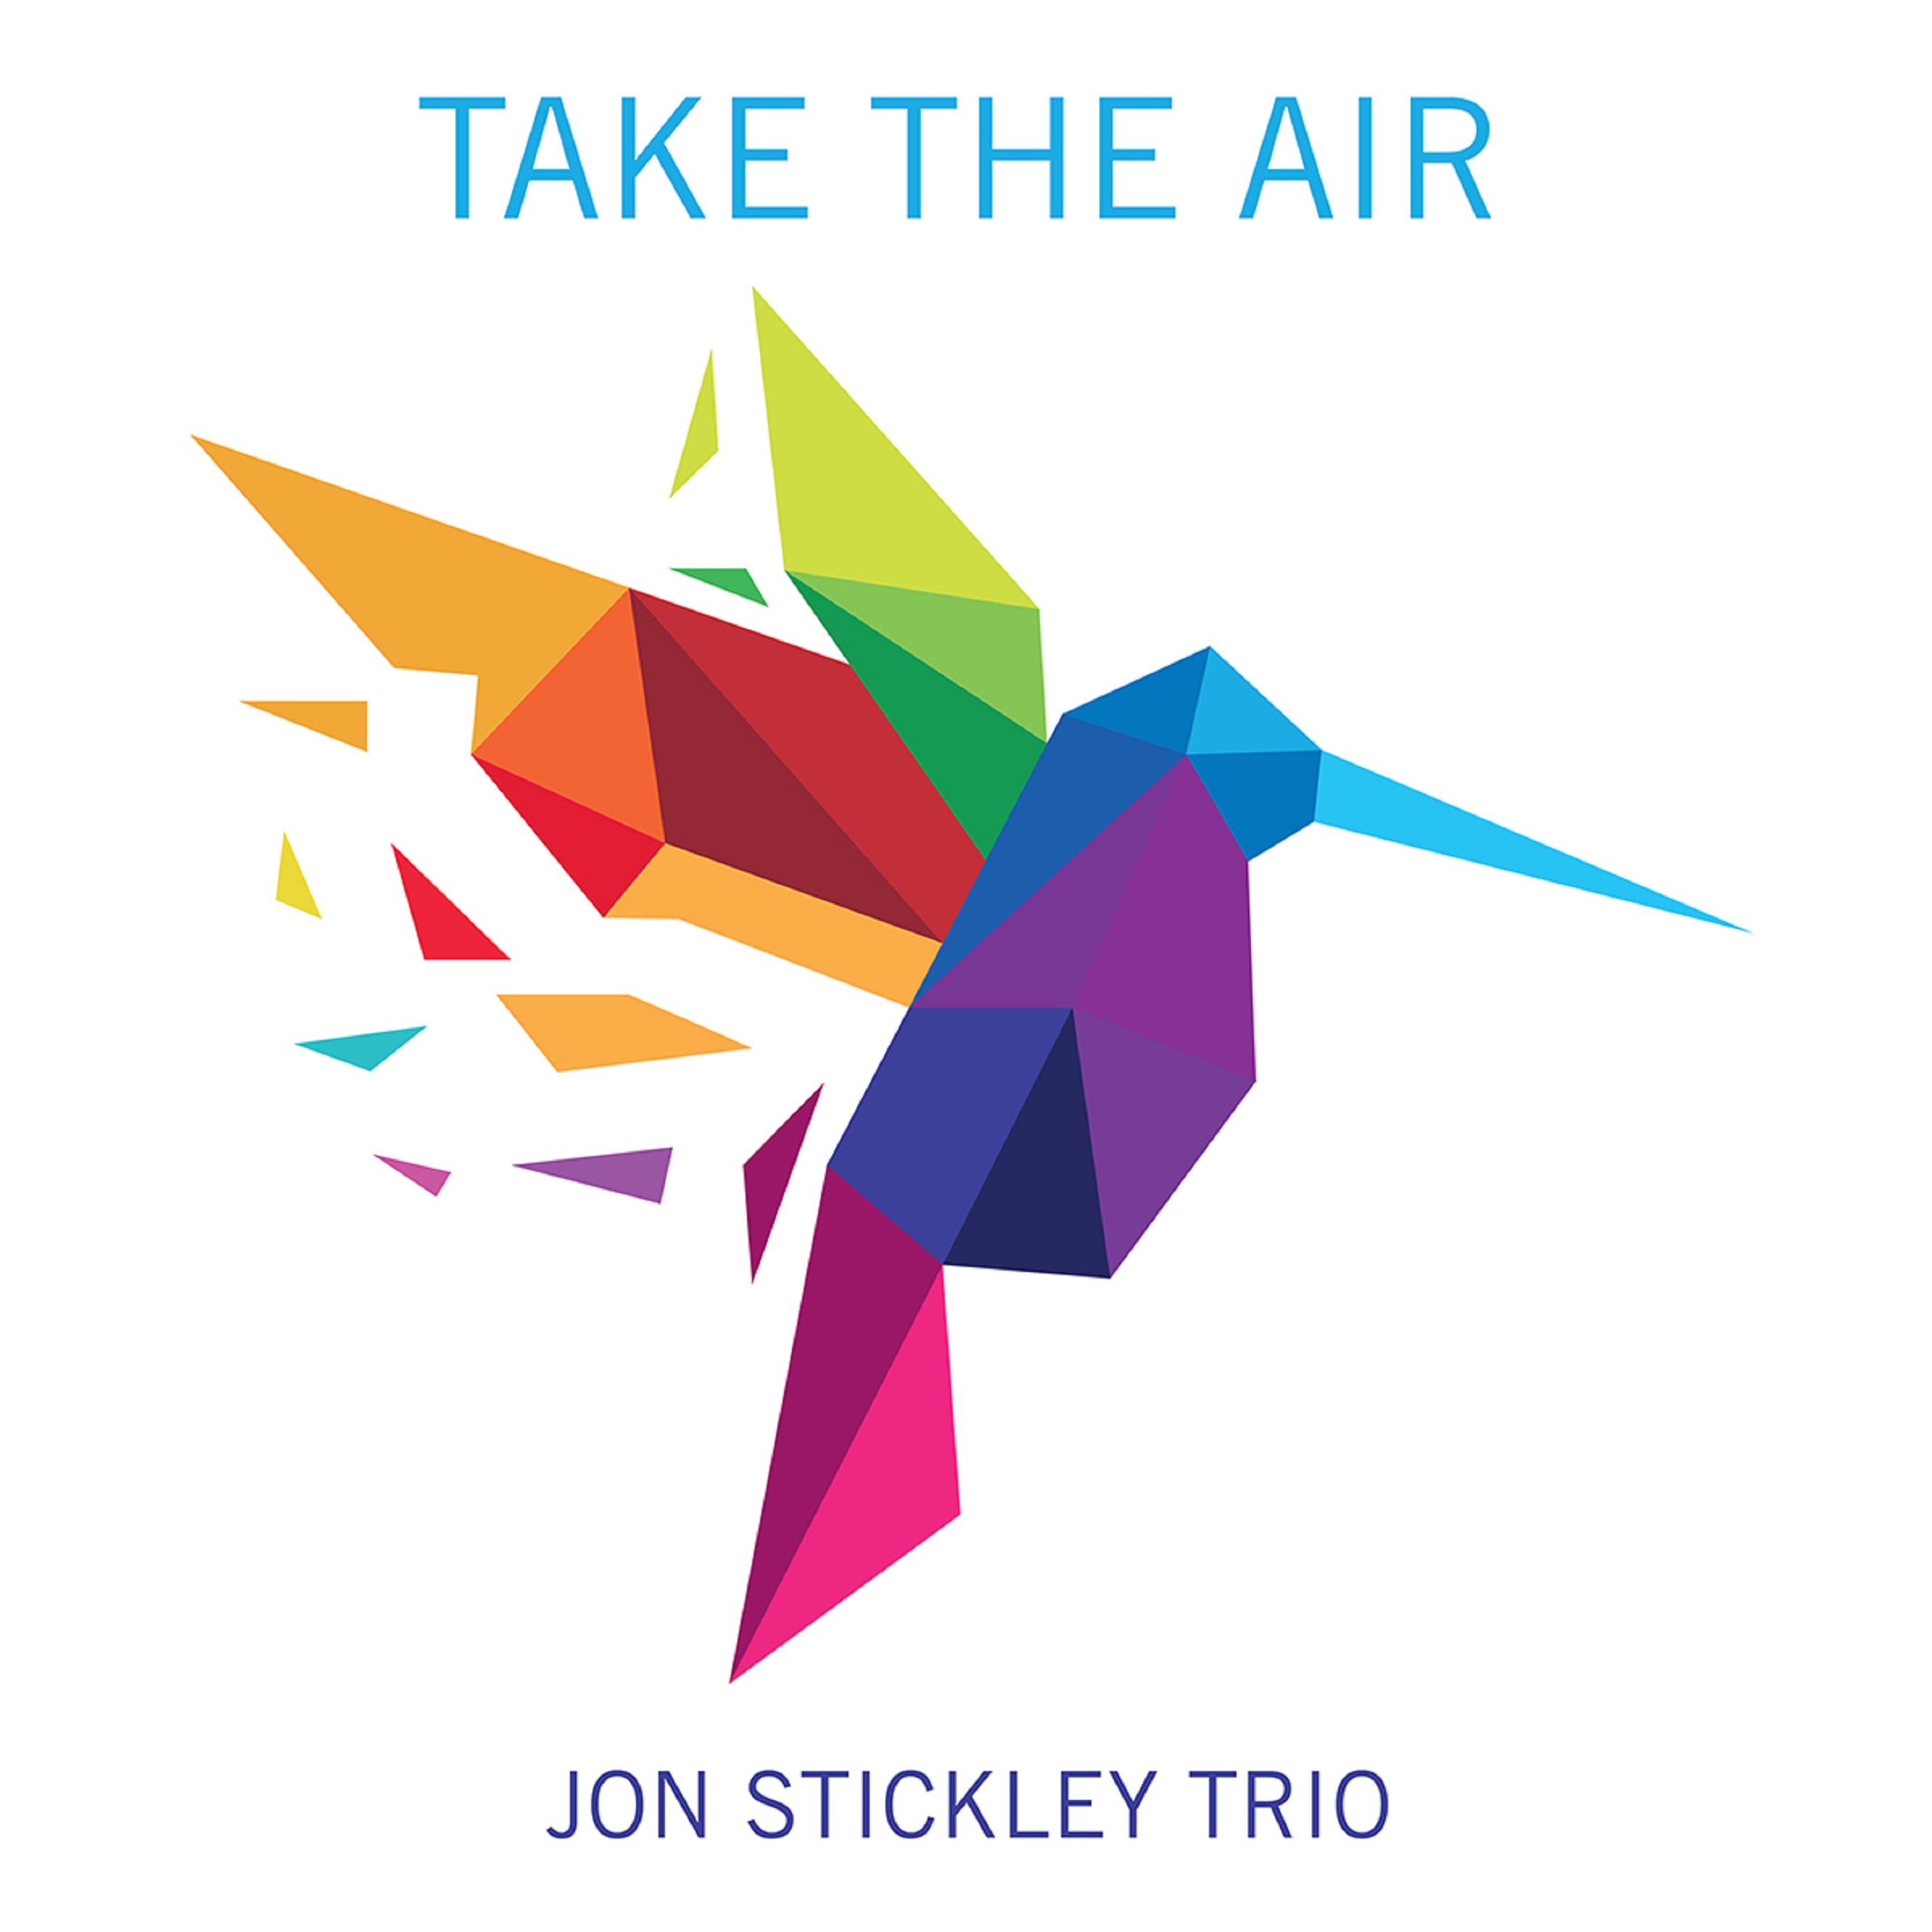 Jon Stickley Trio brings a breezy, laid back vibe to “Take The Air”